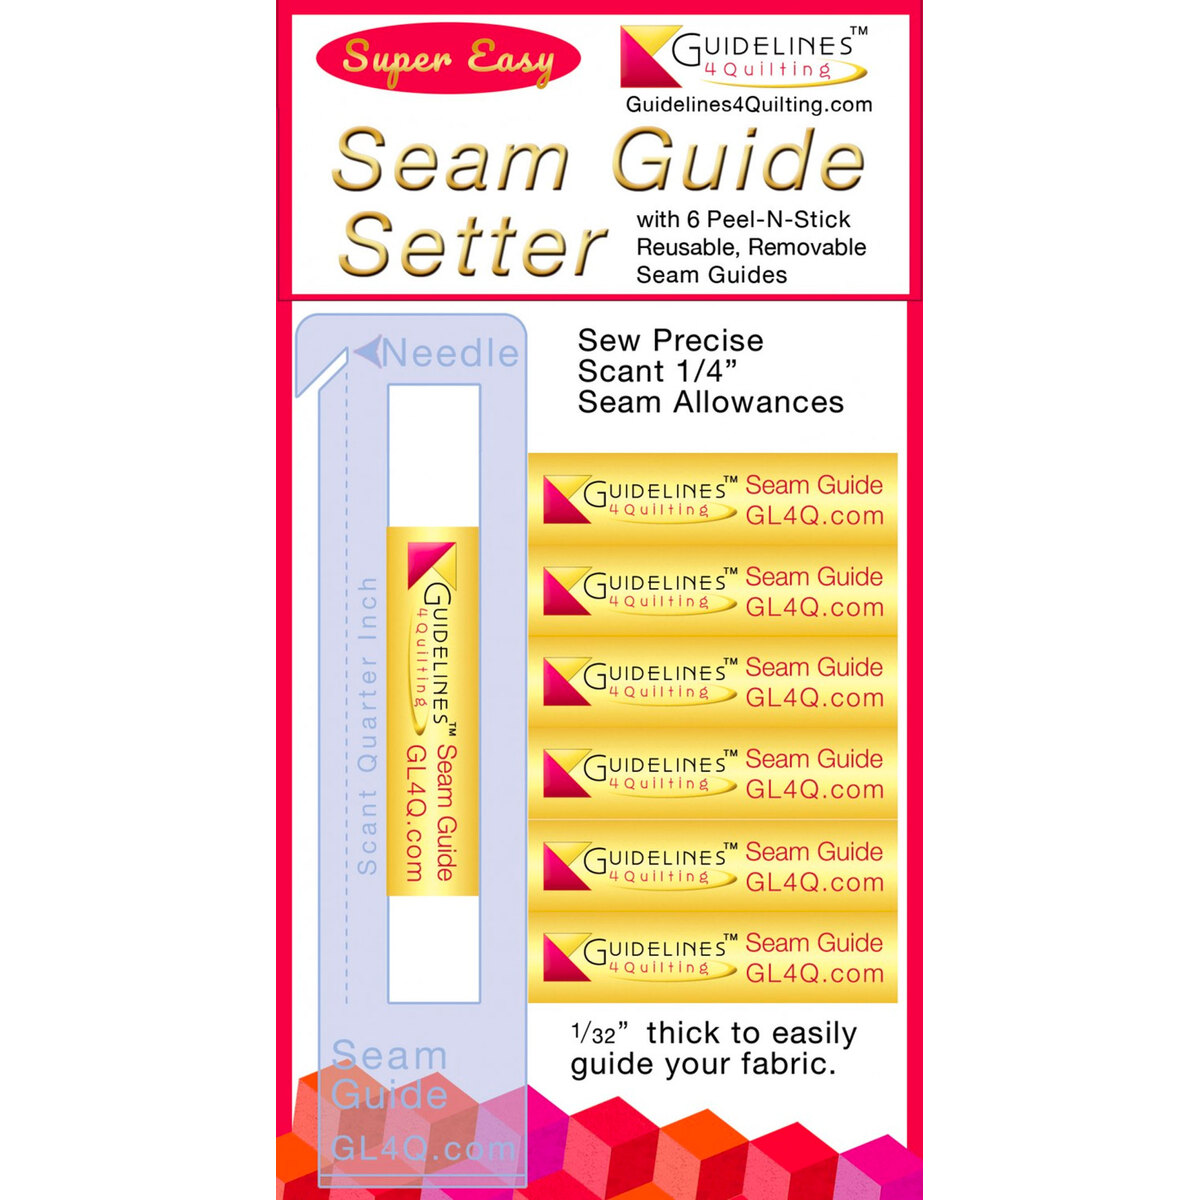 Super Easy Seam Guide Setter for accurate Scant ¼ seams